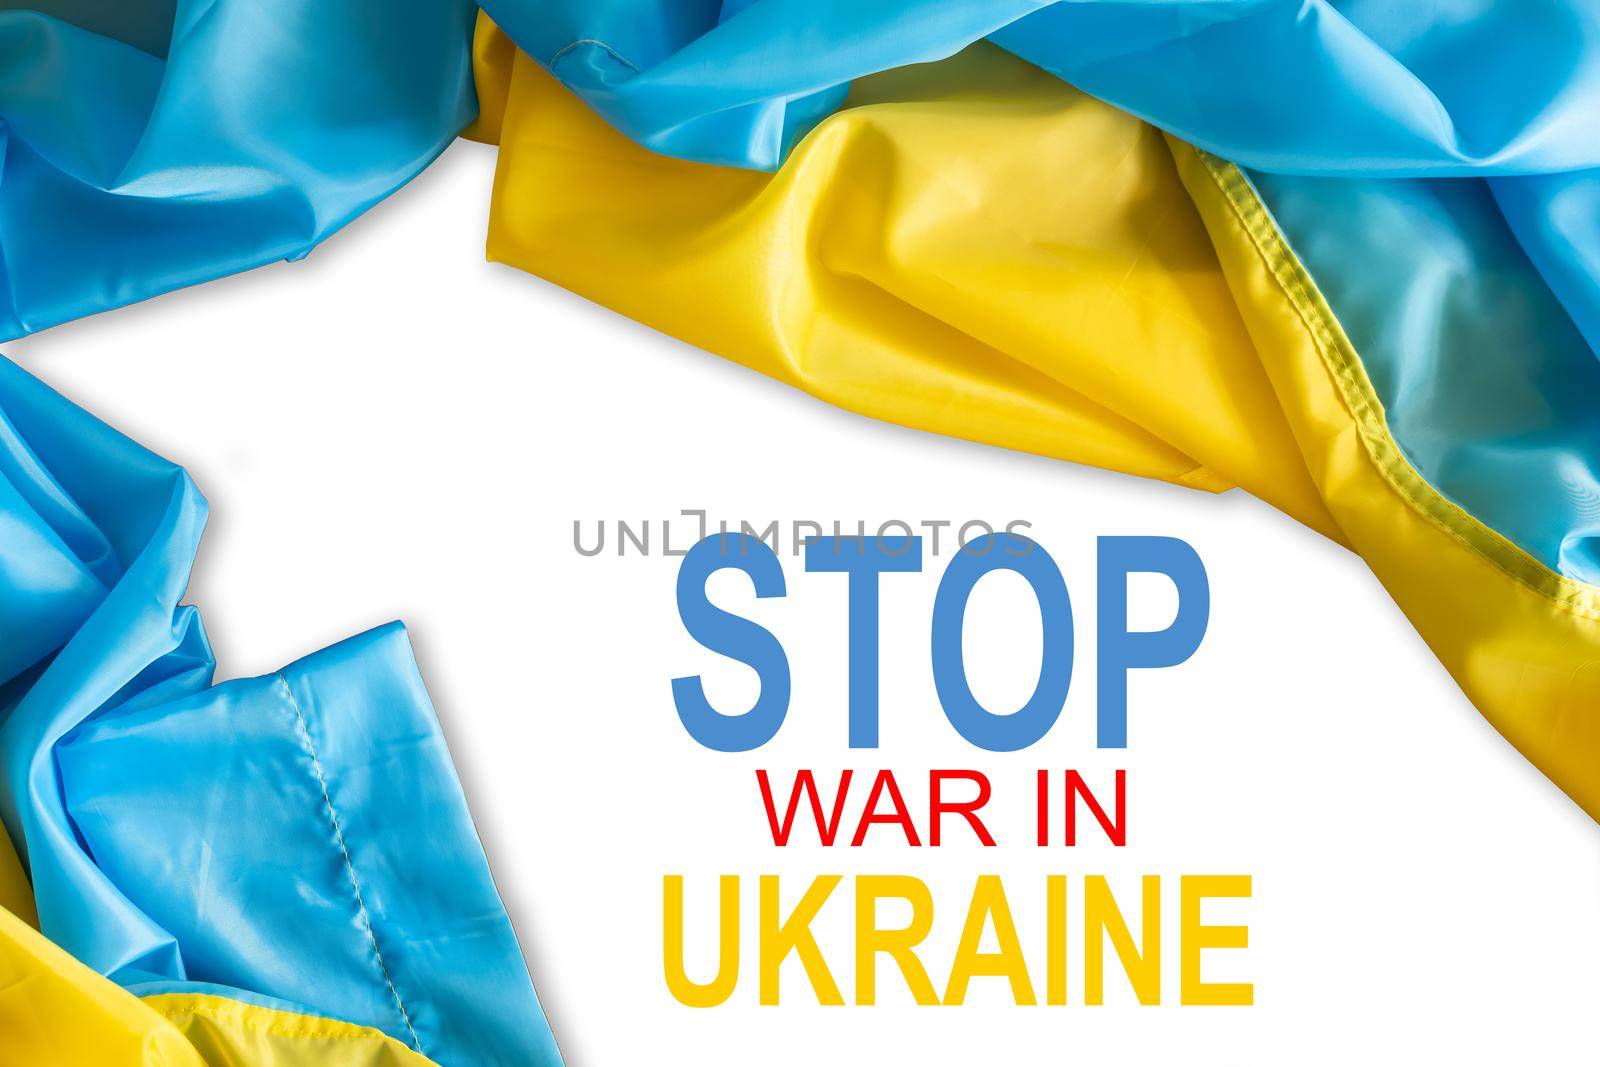 stop war in Ukraine banner illustration. by Andelov13